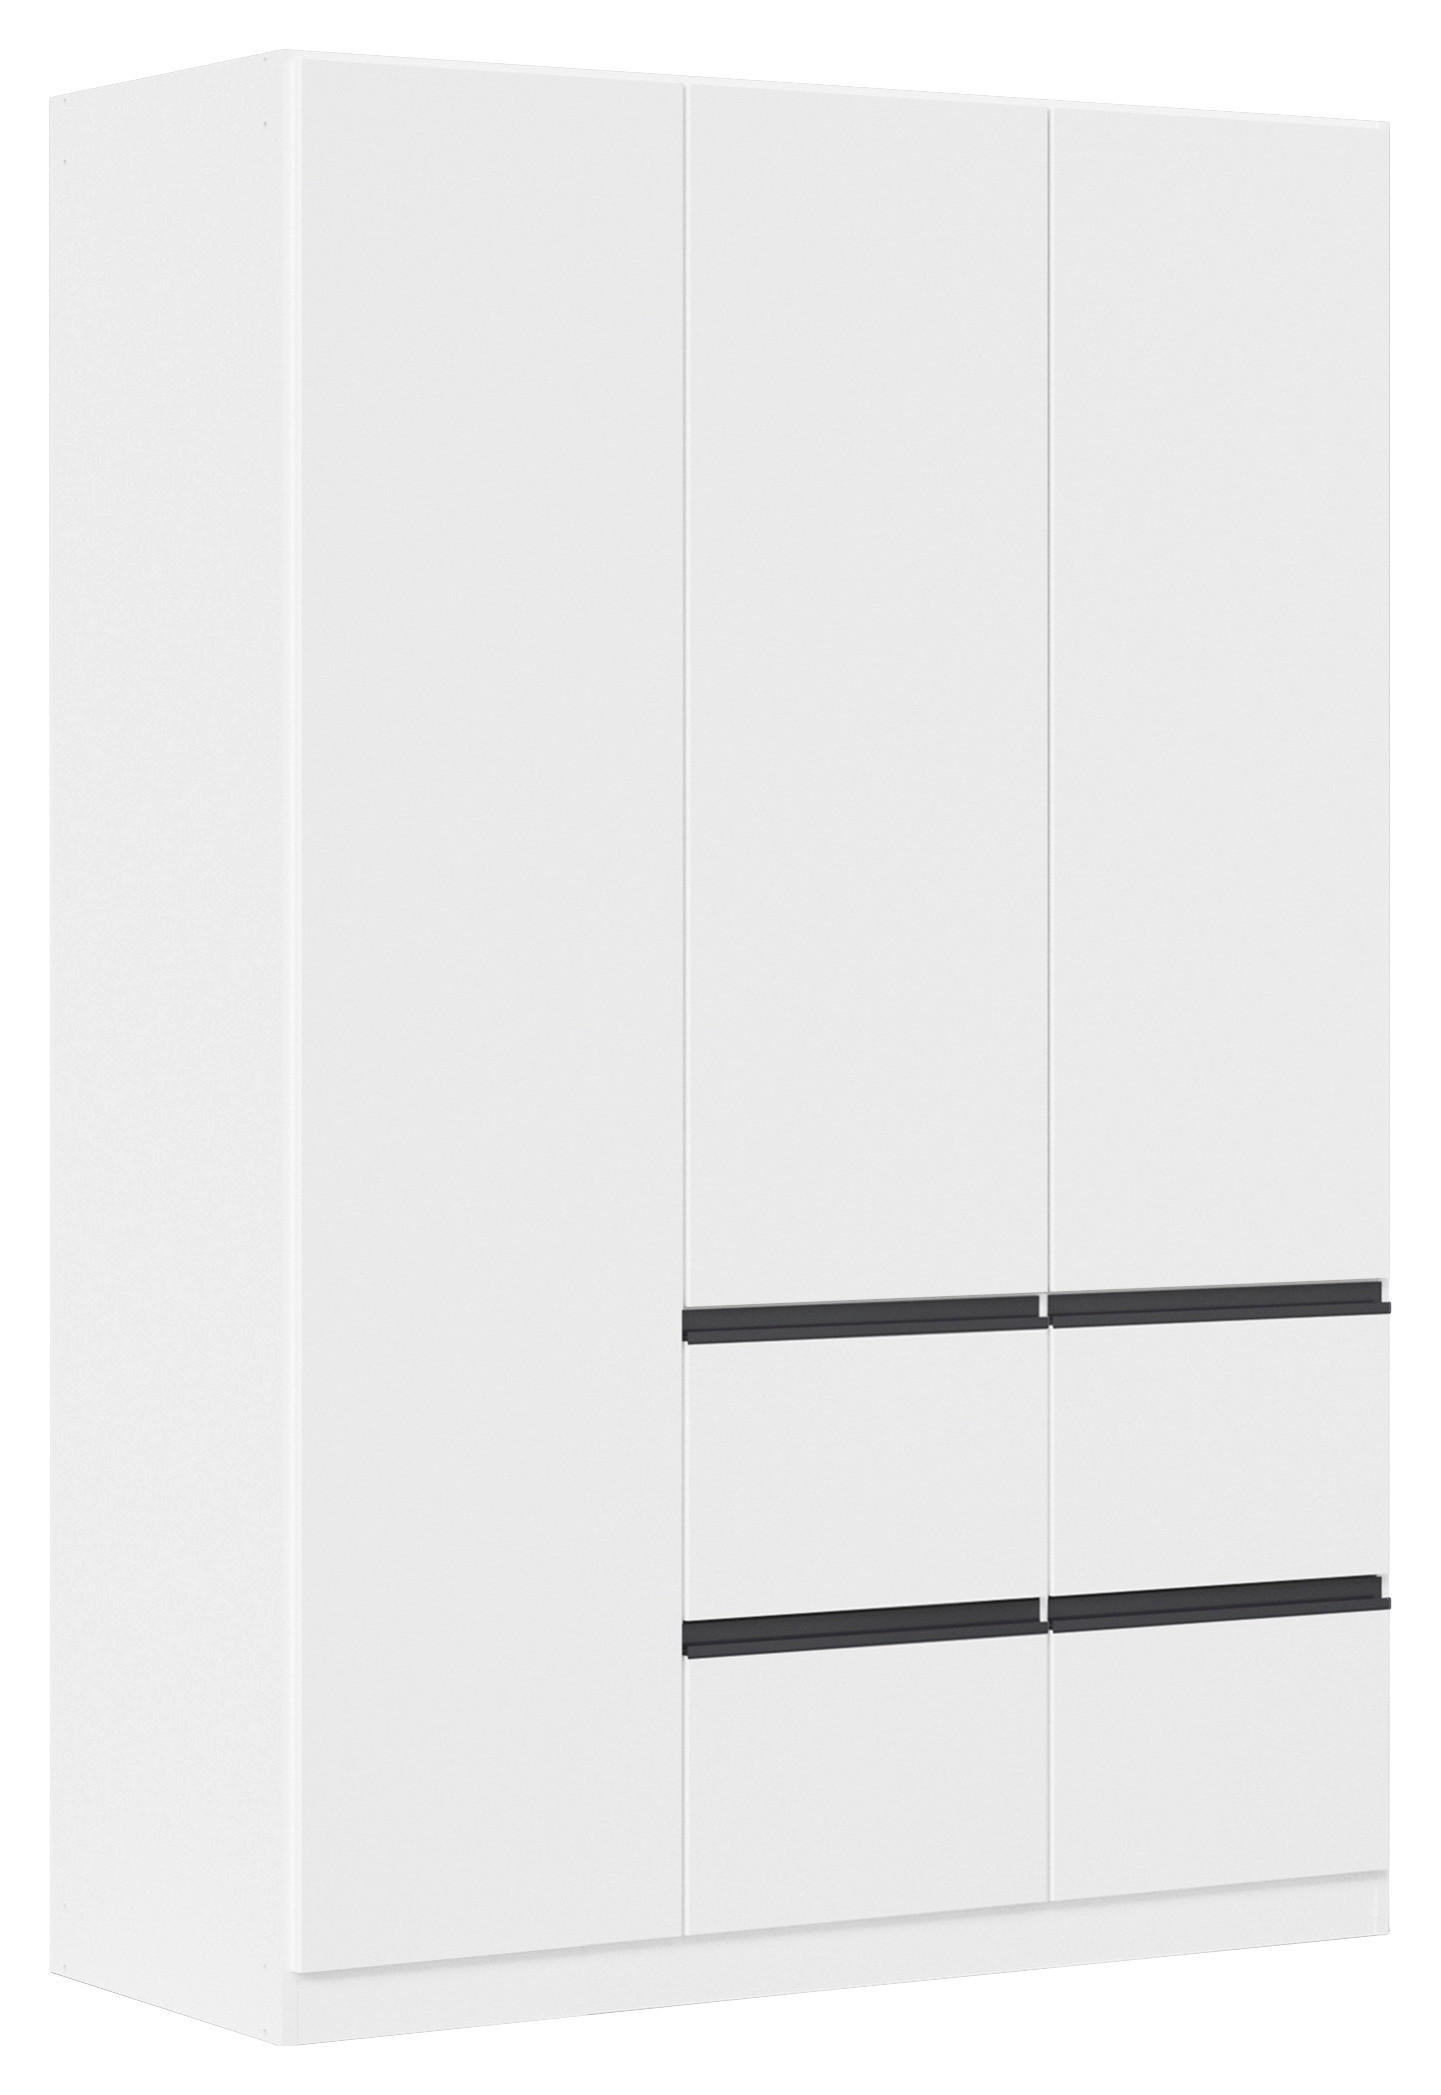 DREHTÜRENSCHRANK 3-türig Weiß, Dunkelgrau  - Dunkelgrau/Weiß, Trend, Holzwerkstoff/Kunststoff (136/197/54cm) - Xora